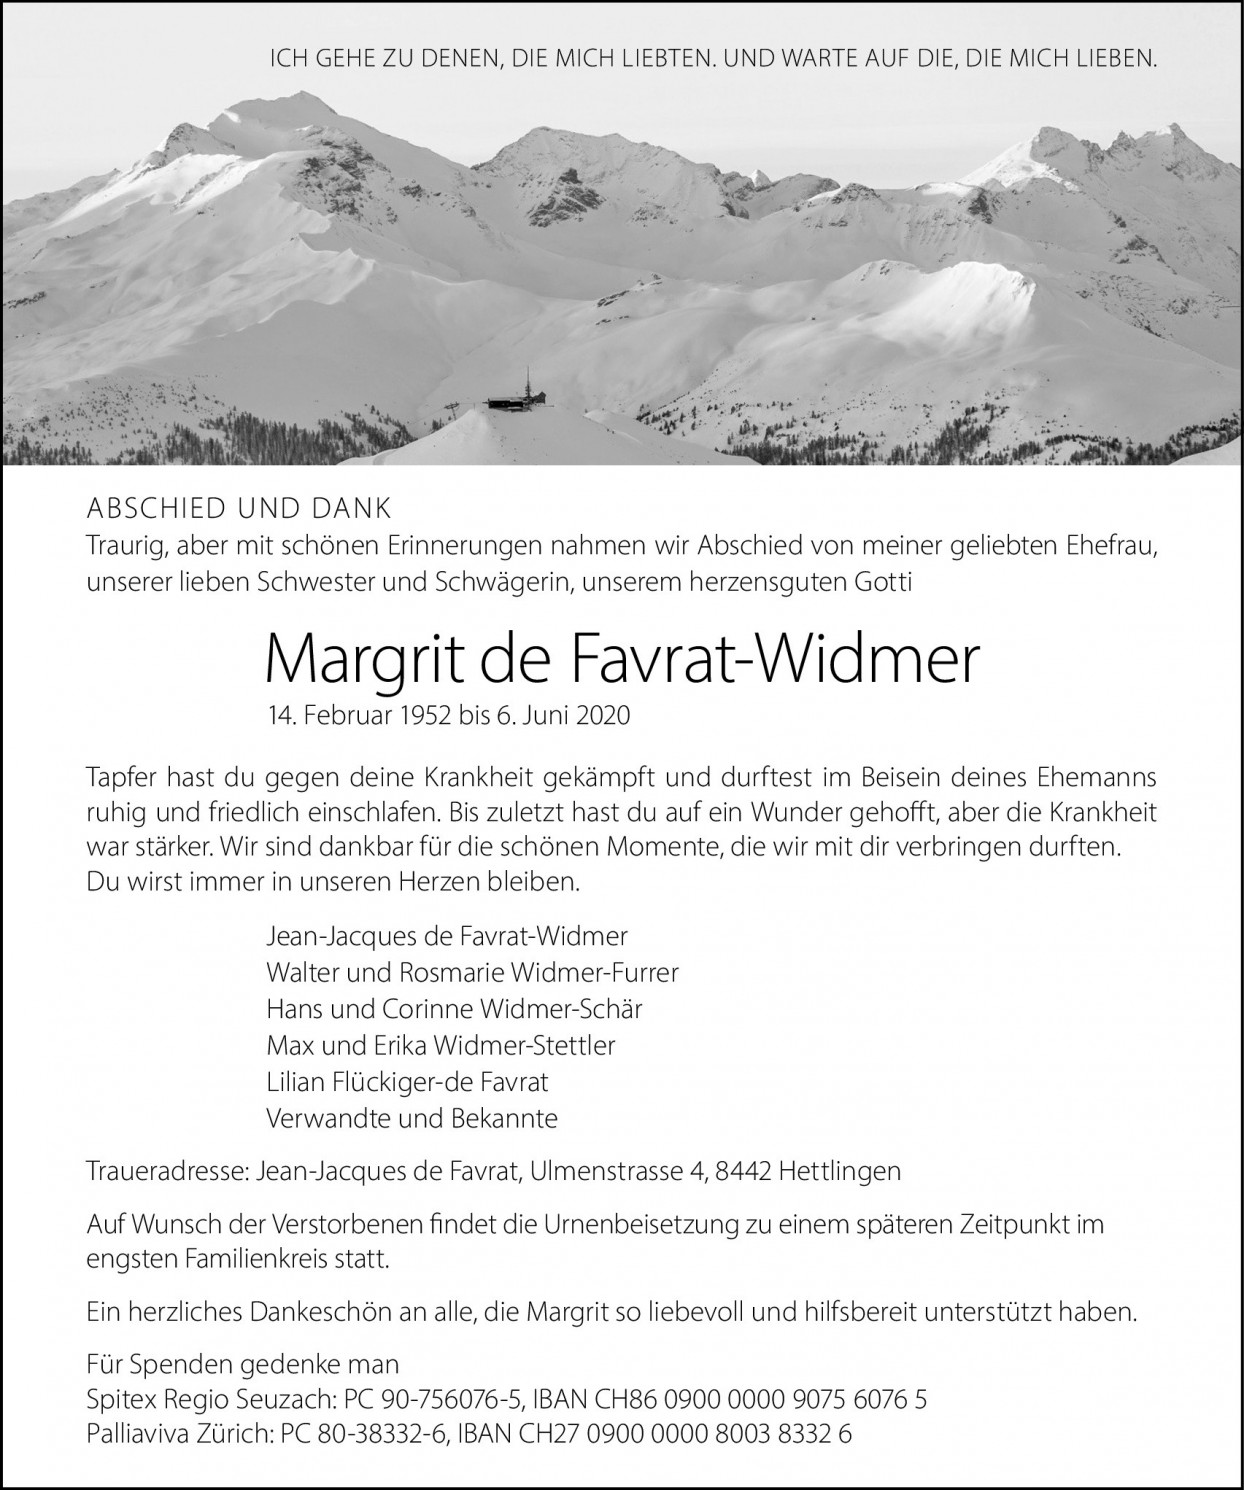 Margrit de Favrat-Widmer